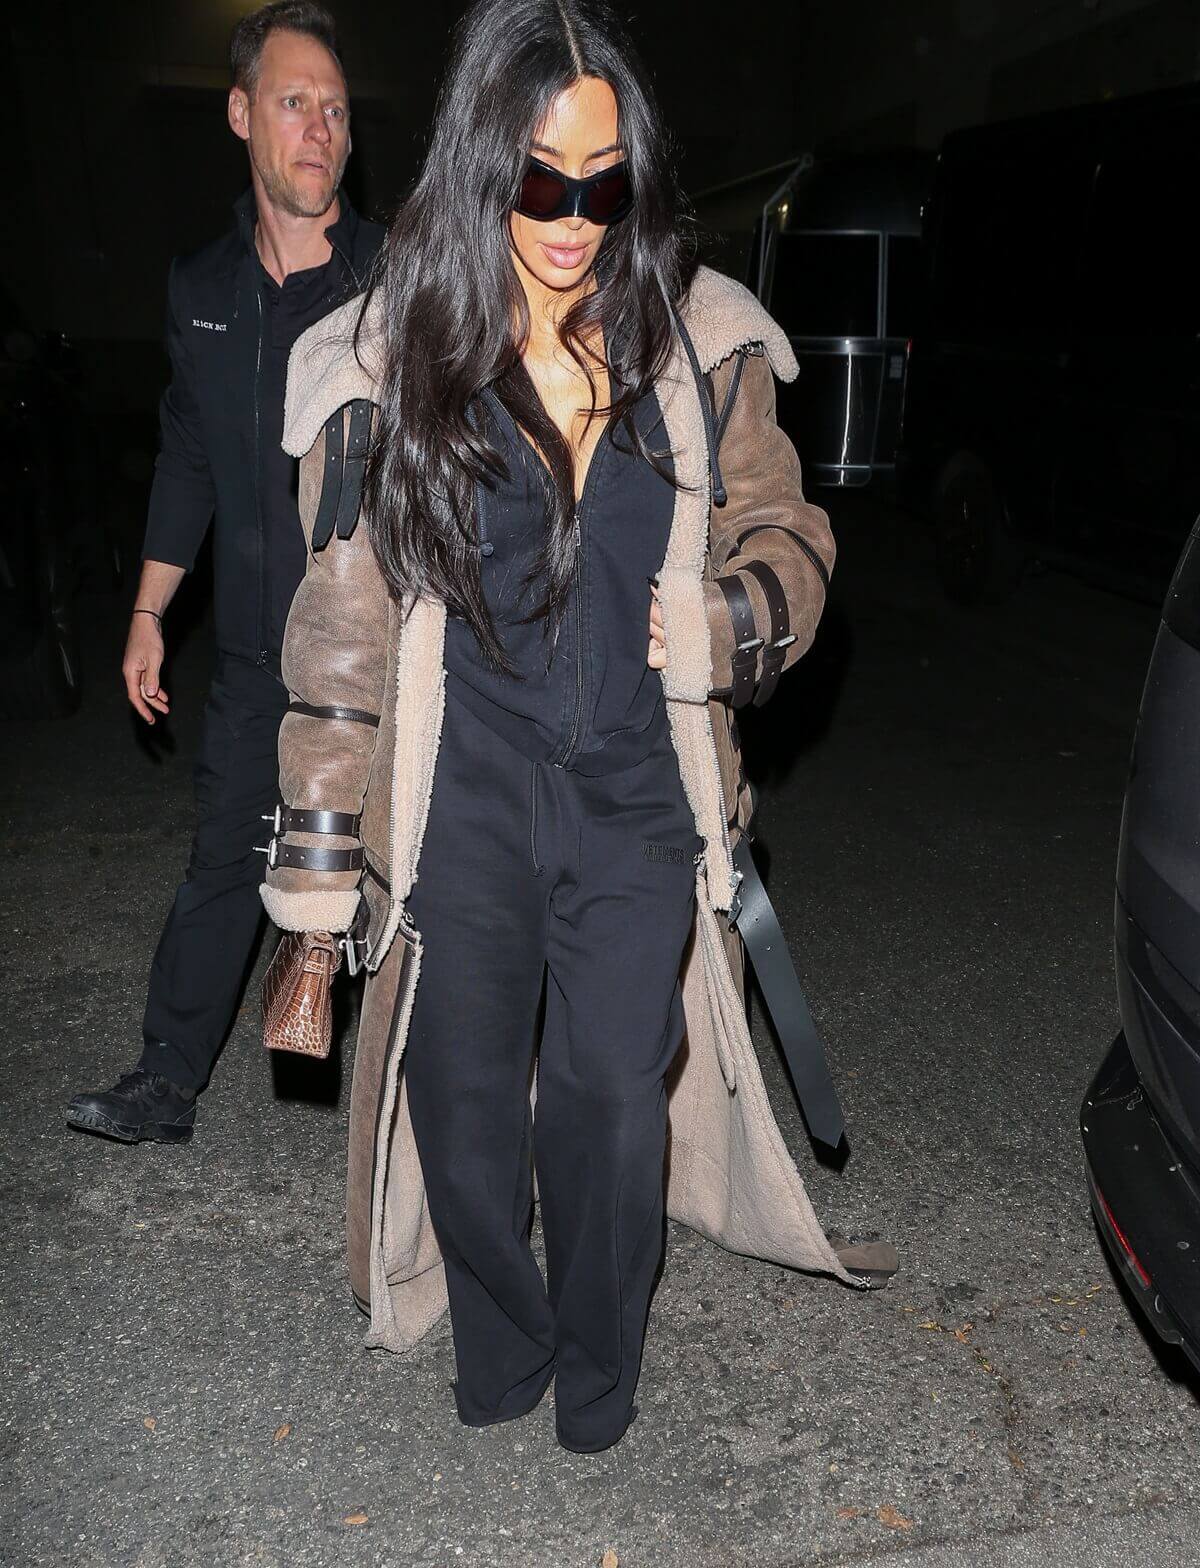 Kim Kardashian walking the streets wearing a Shearling Sheep Coat and holding a cell phone.